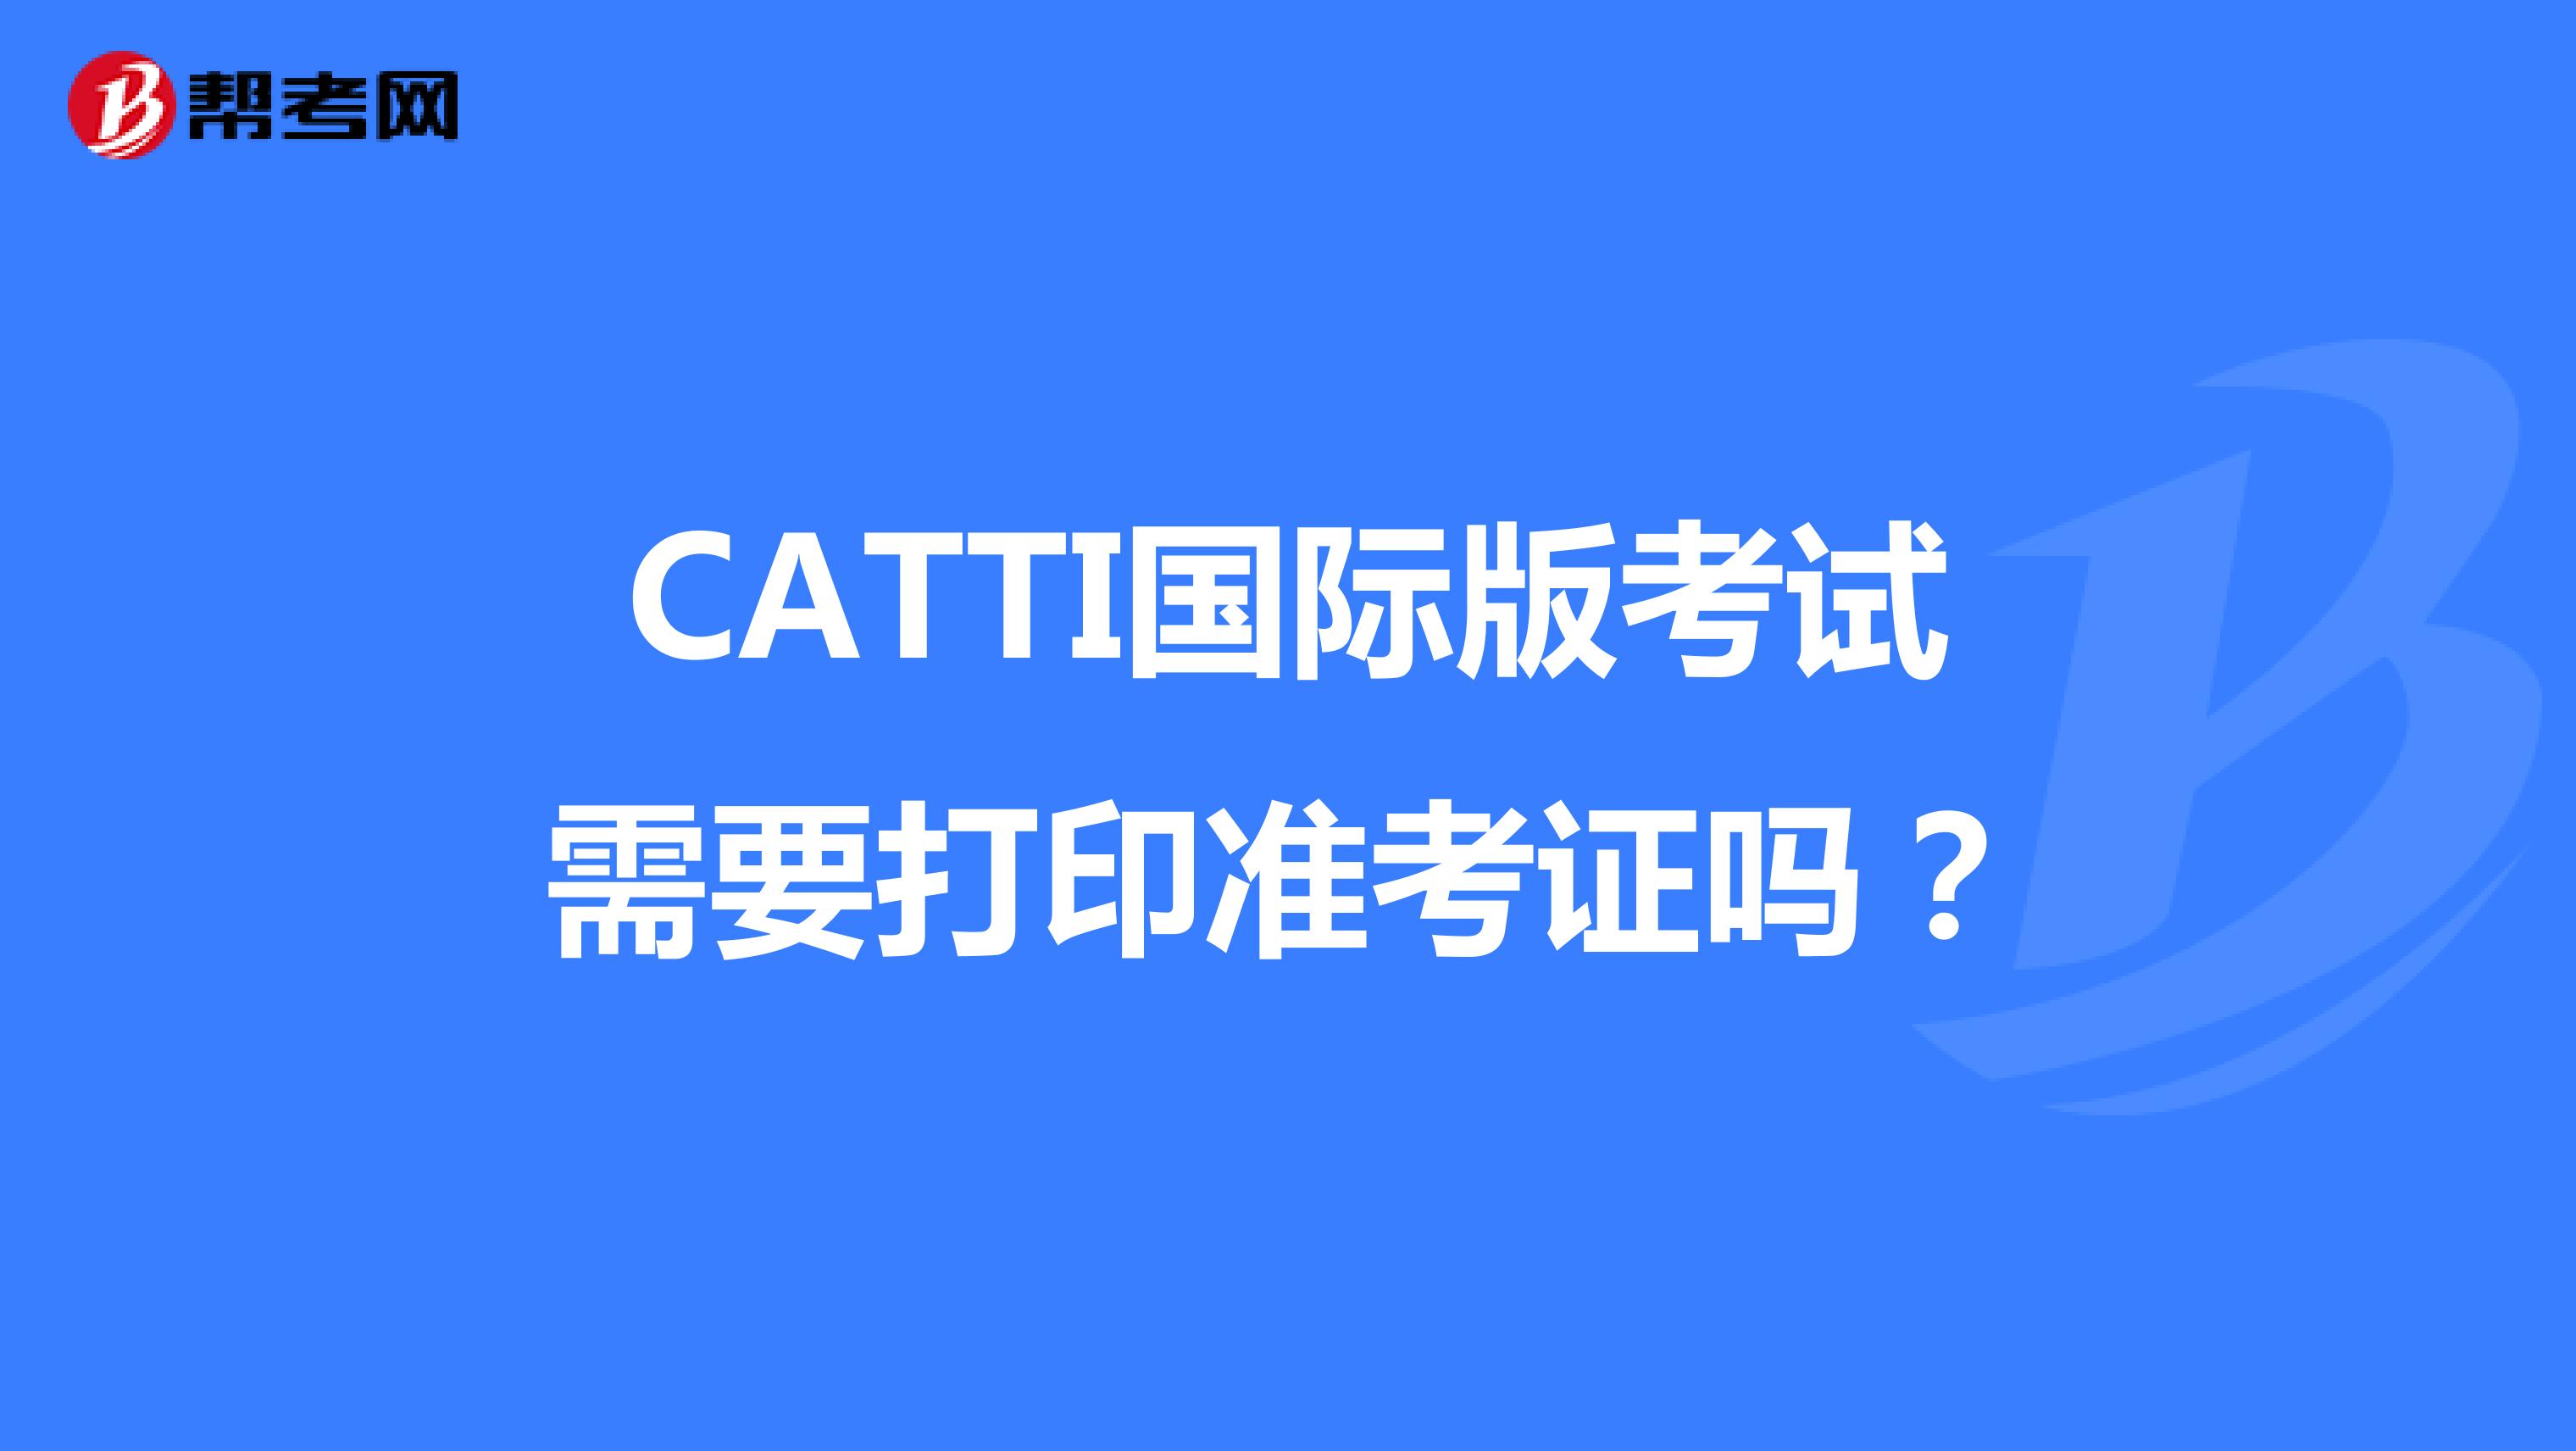 CATTI国际版考试需要打印准考证吗？